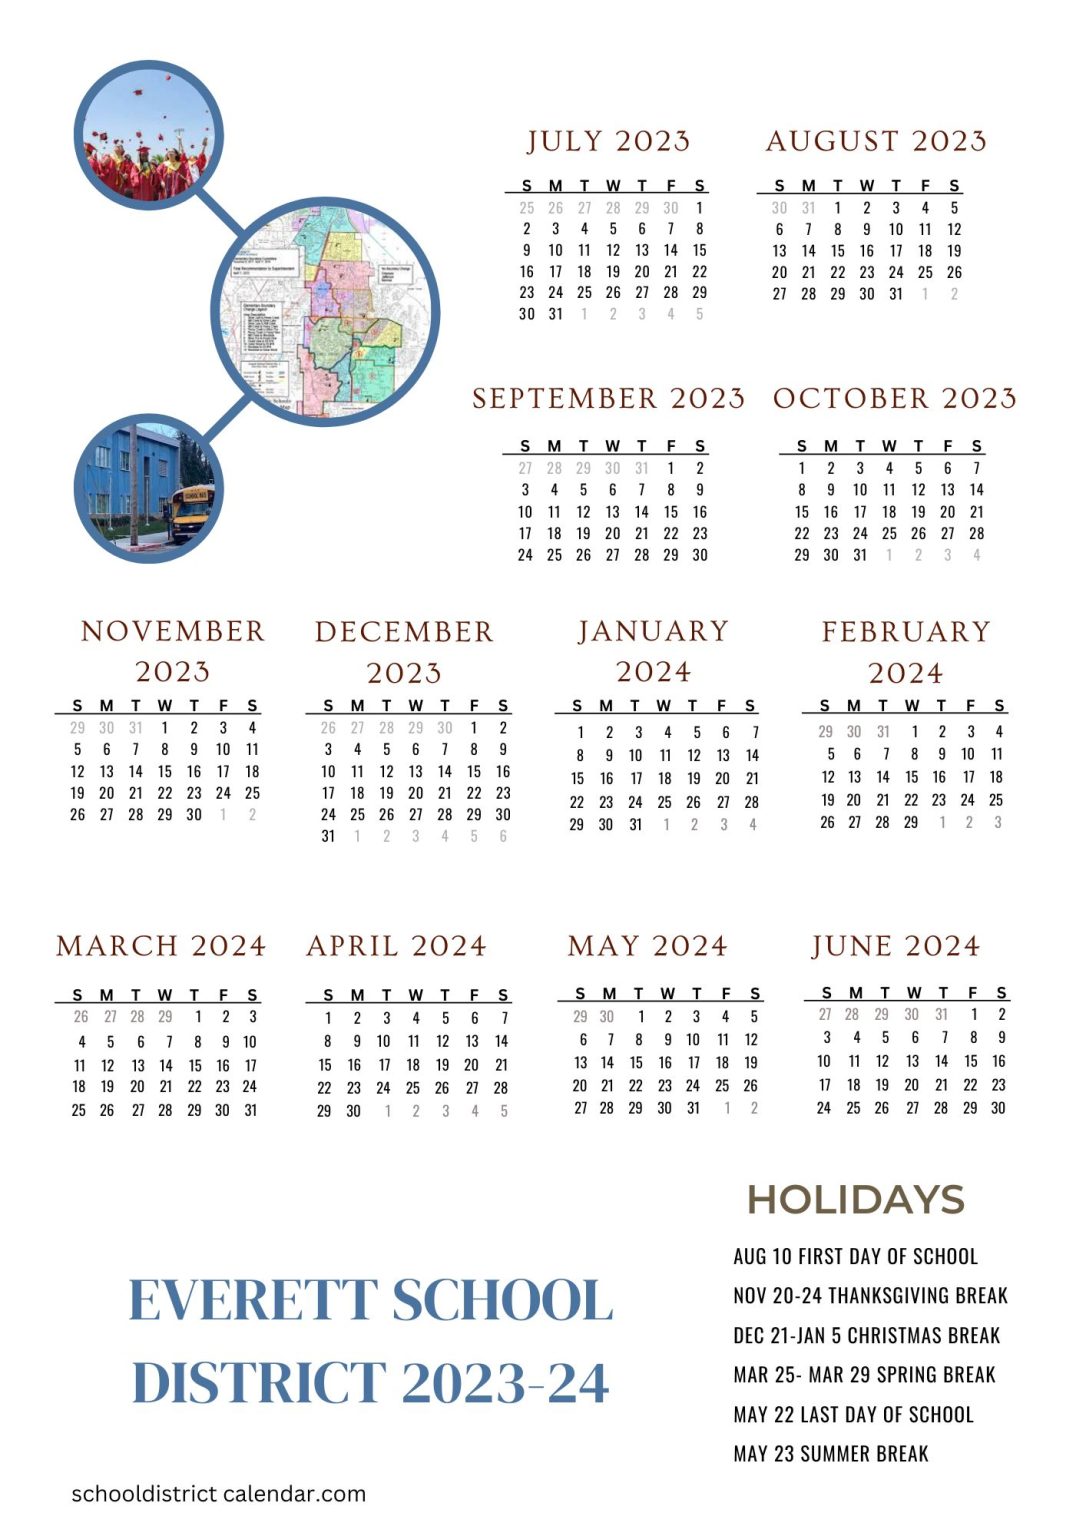 Everett School District Calendar Holidays 2023 2024